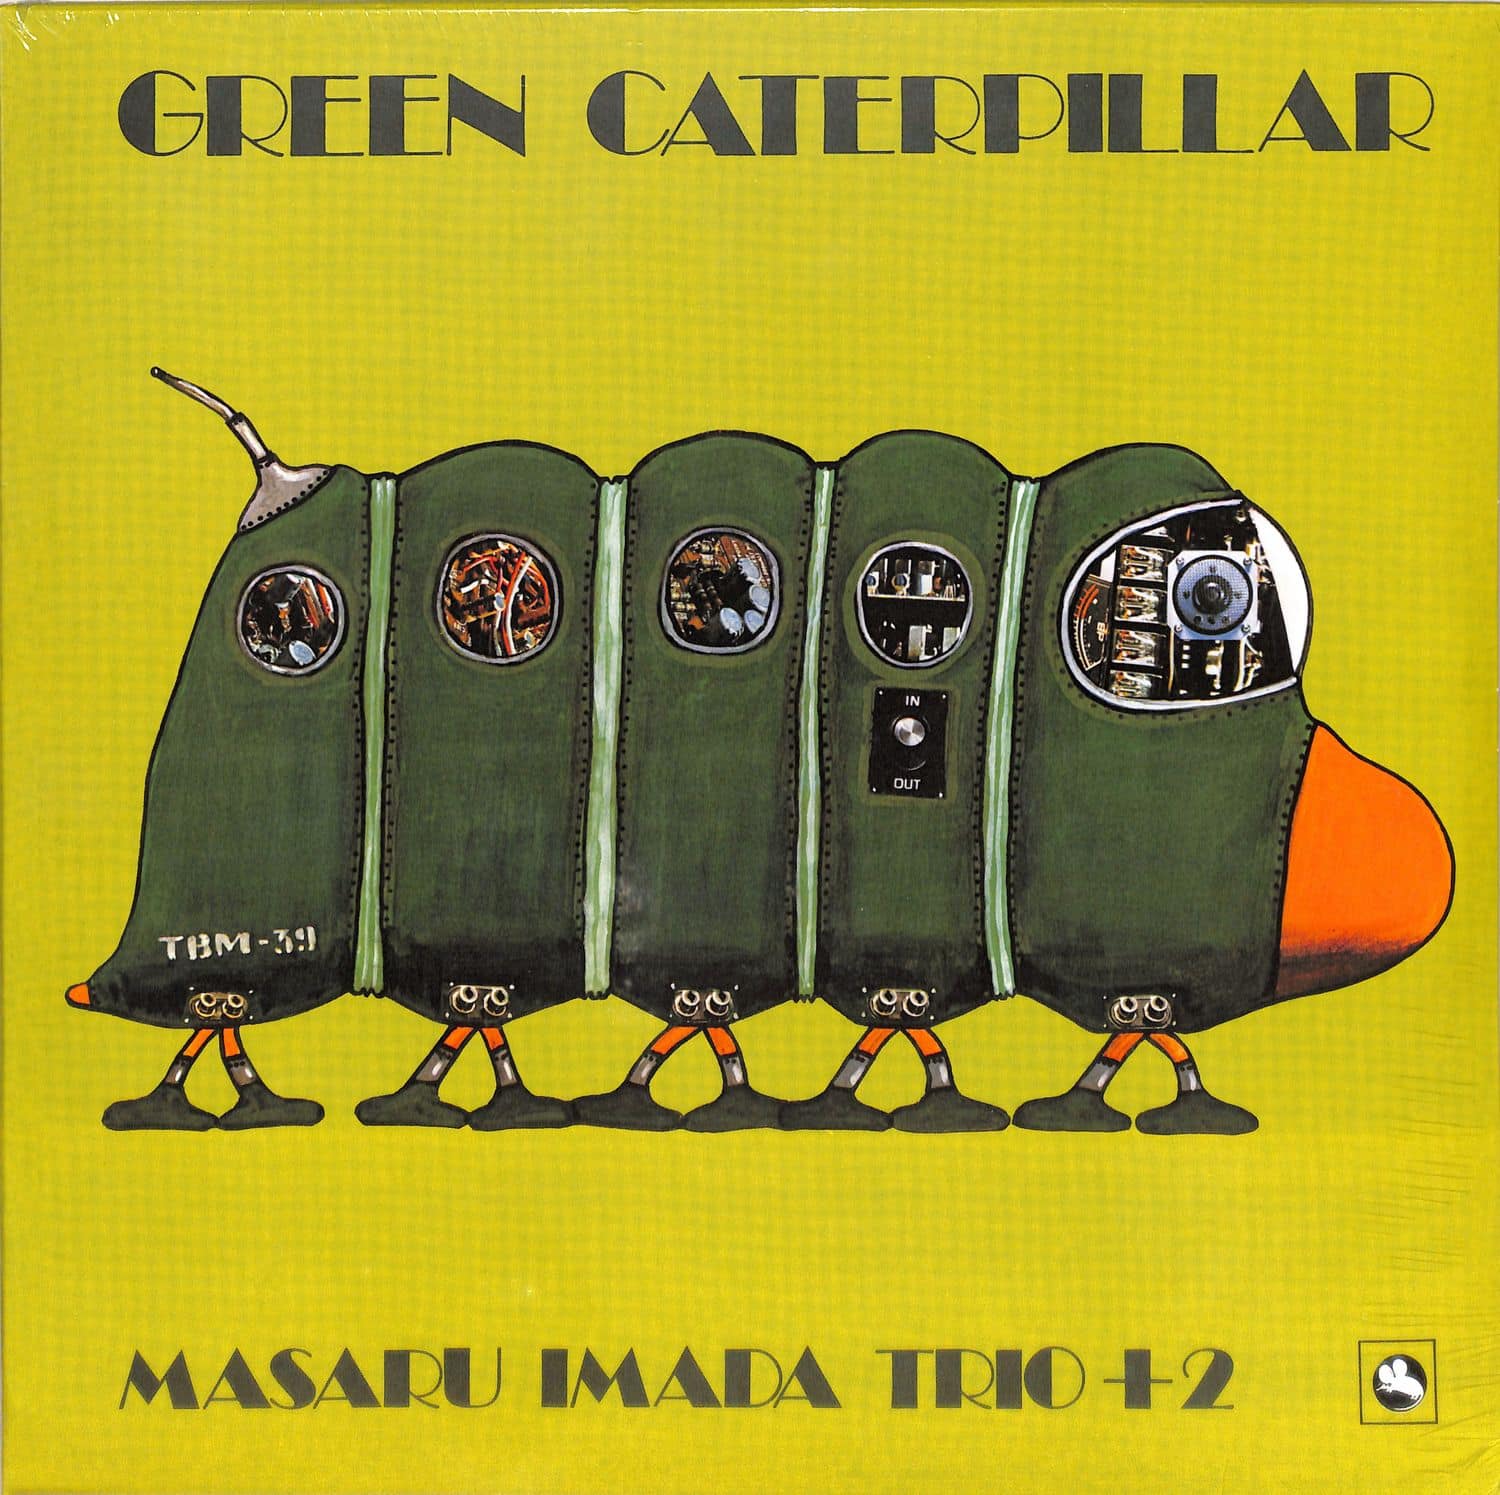 Masaru Imada Trio + 2 - GREEN CATERPILLAR 